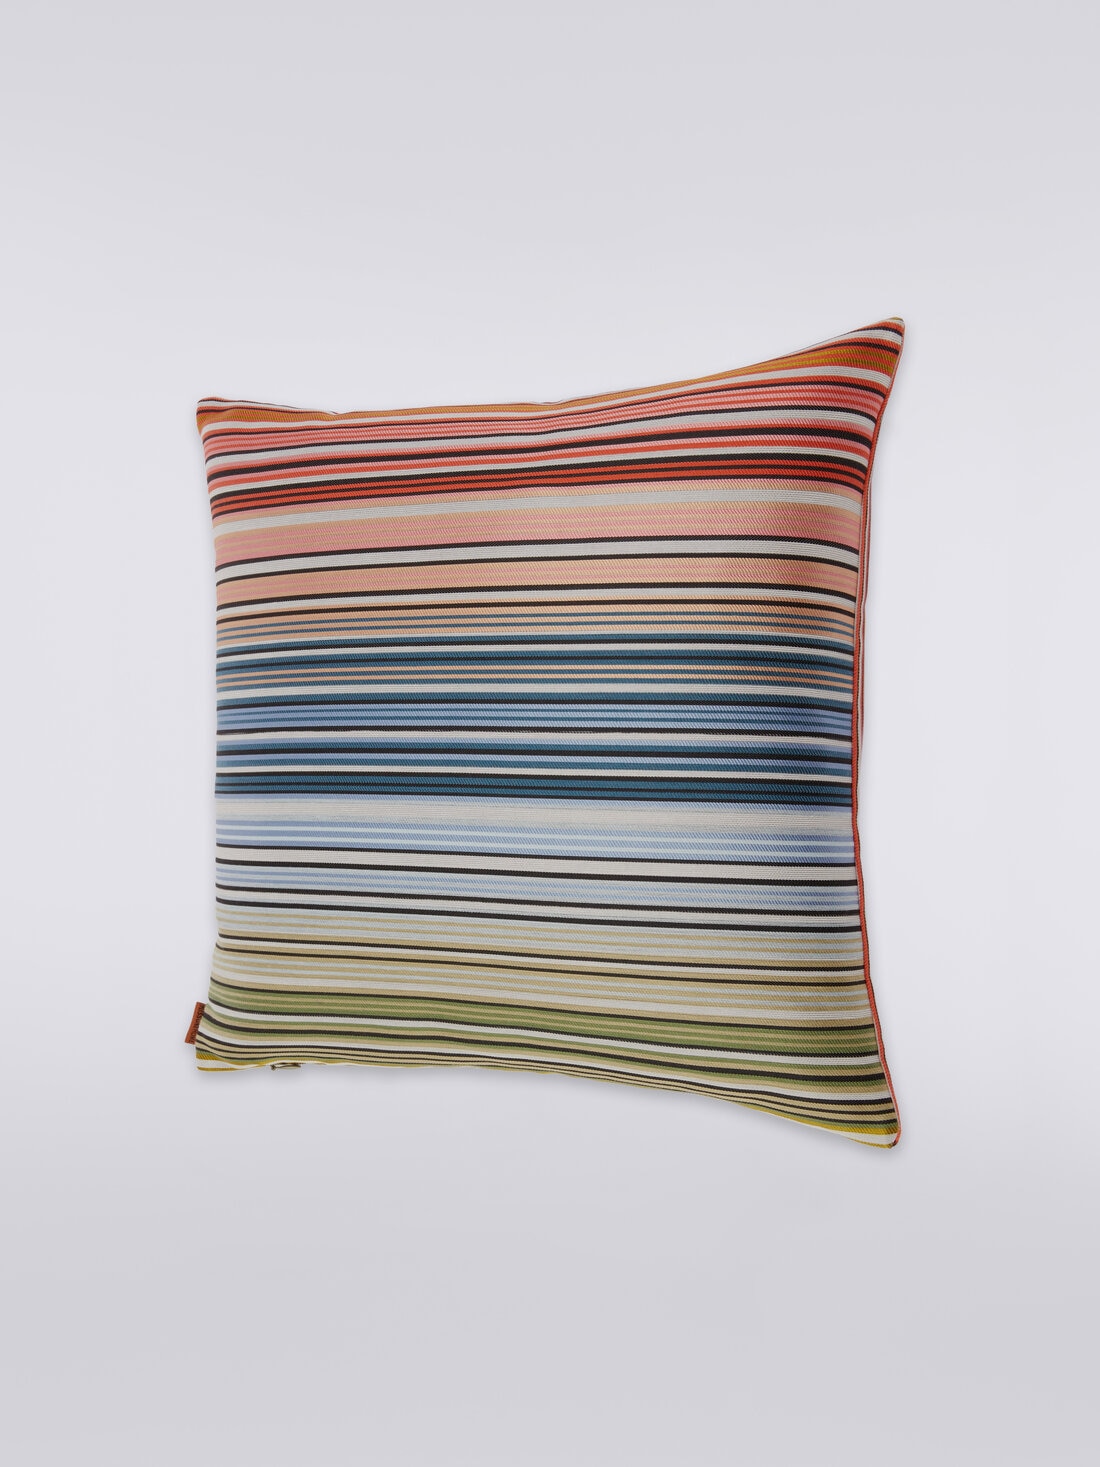 Brighton PW 40x40 cm cushion, Multicoloured  - 8051275581277 - 1